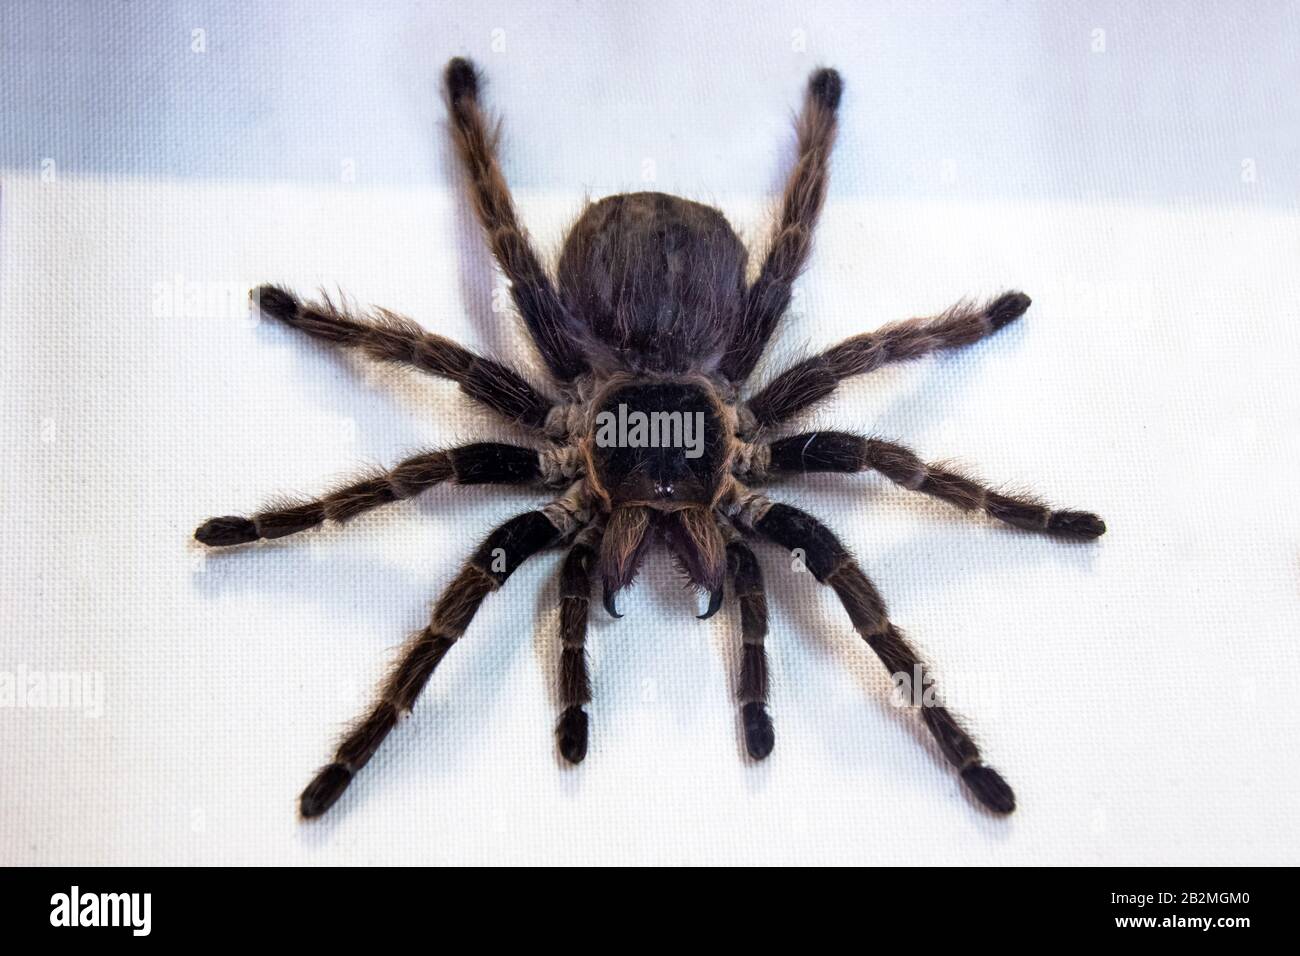 The black tarantula Grammostola pulchra spider sits on white cloth Stock Photo